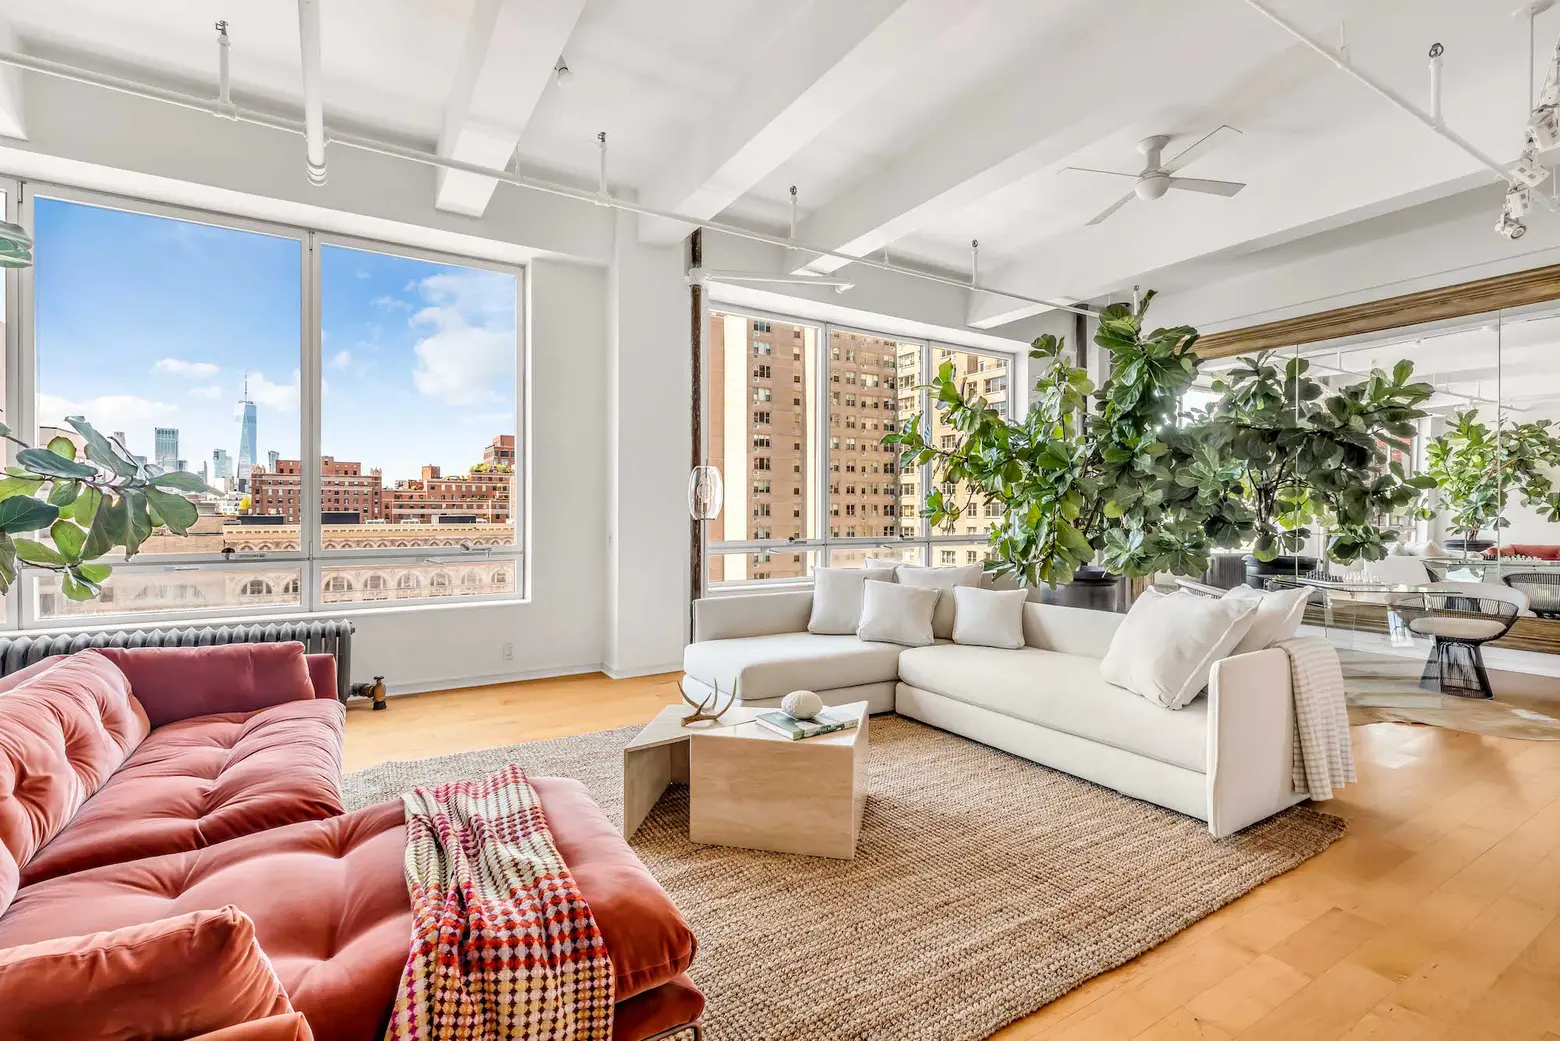 Susan Sarandon sells her Chelsea duplex for $7.9M asking price